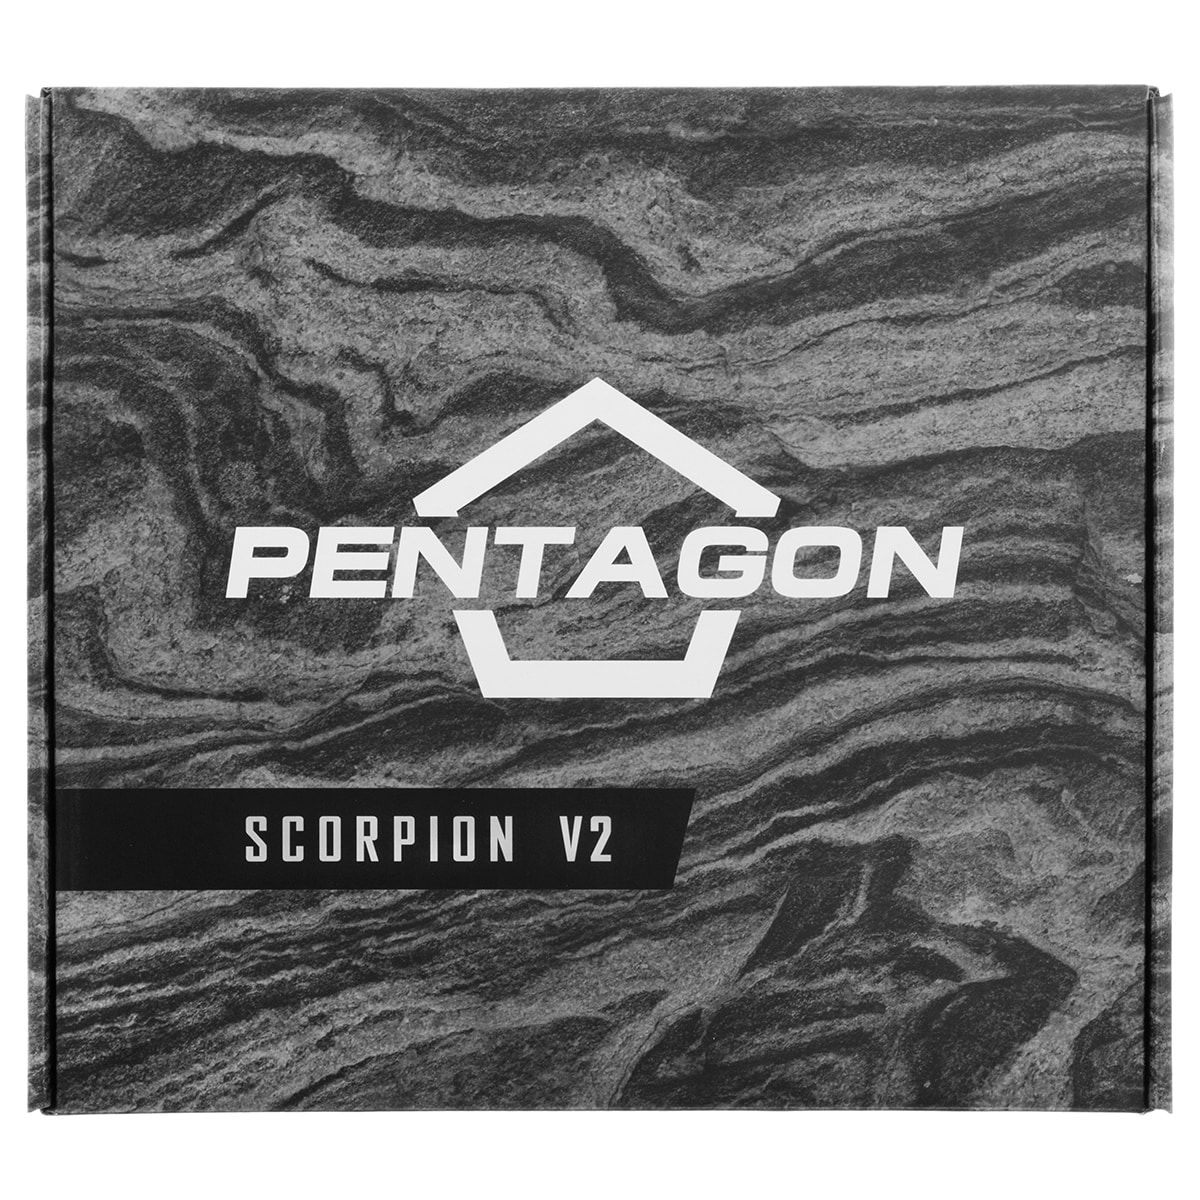 Buty Pentagon Scorpion Suede V2 4